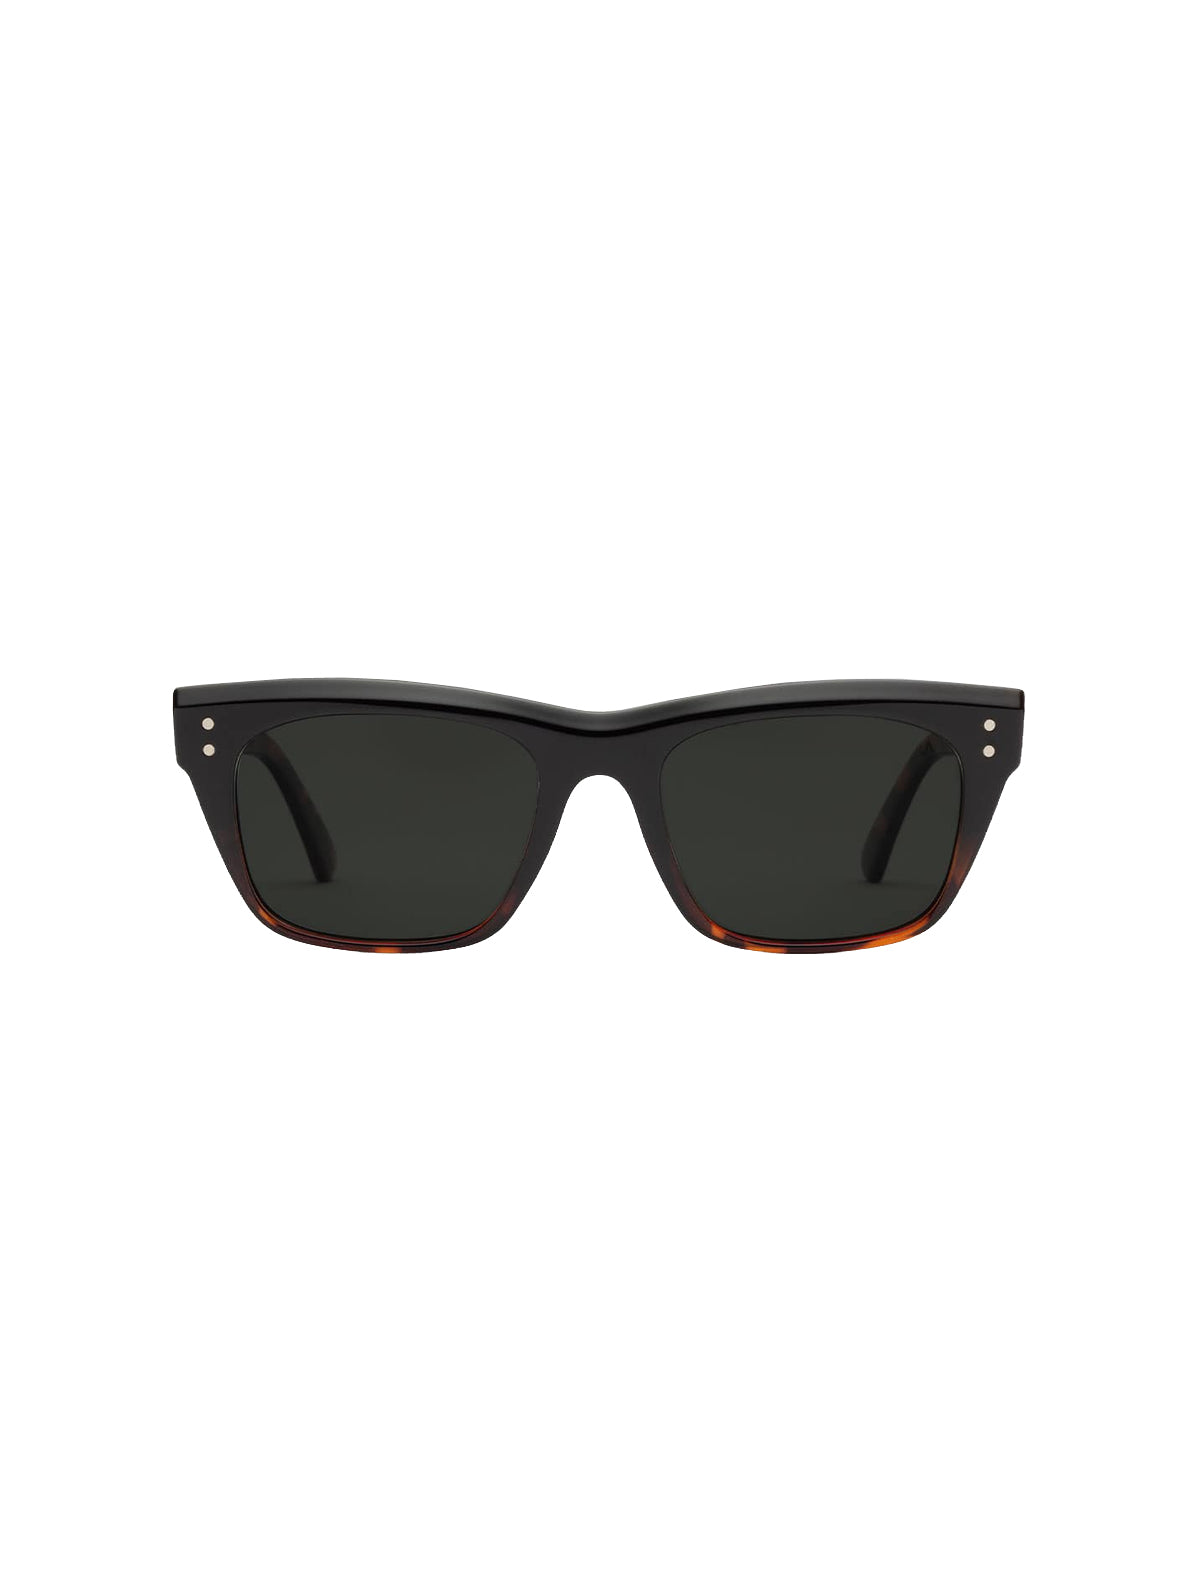 Volcom Stonview Polarized Sunglasses GlossDarkside Grey